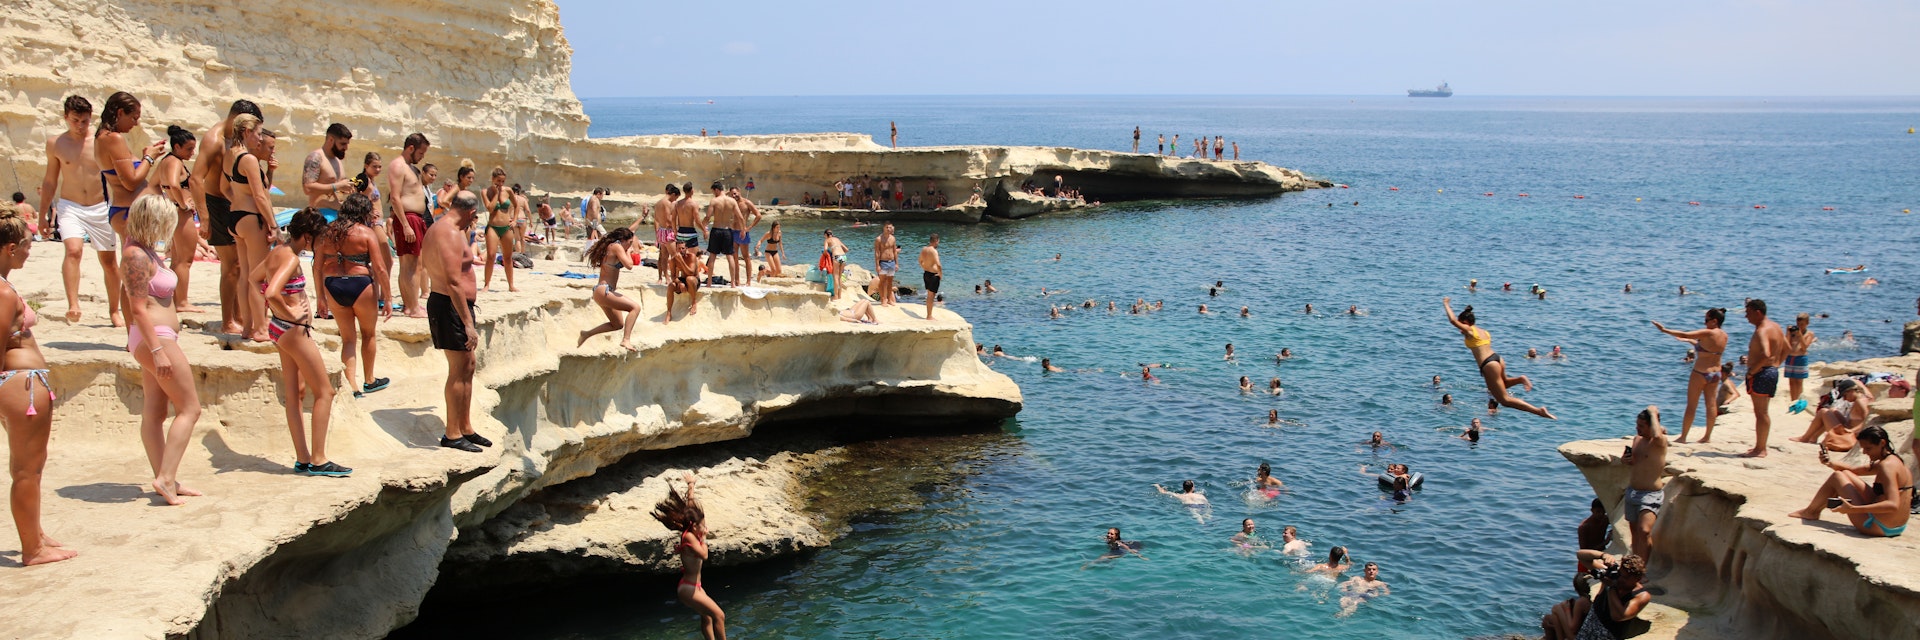 Marsaxlokk, Malta – August 13, 2019: St. Peter's Pool near Marsaxlokk. A very popular place for Locals and Tourists. Malta